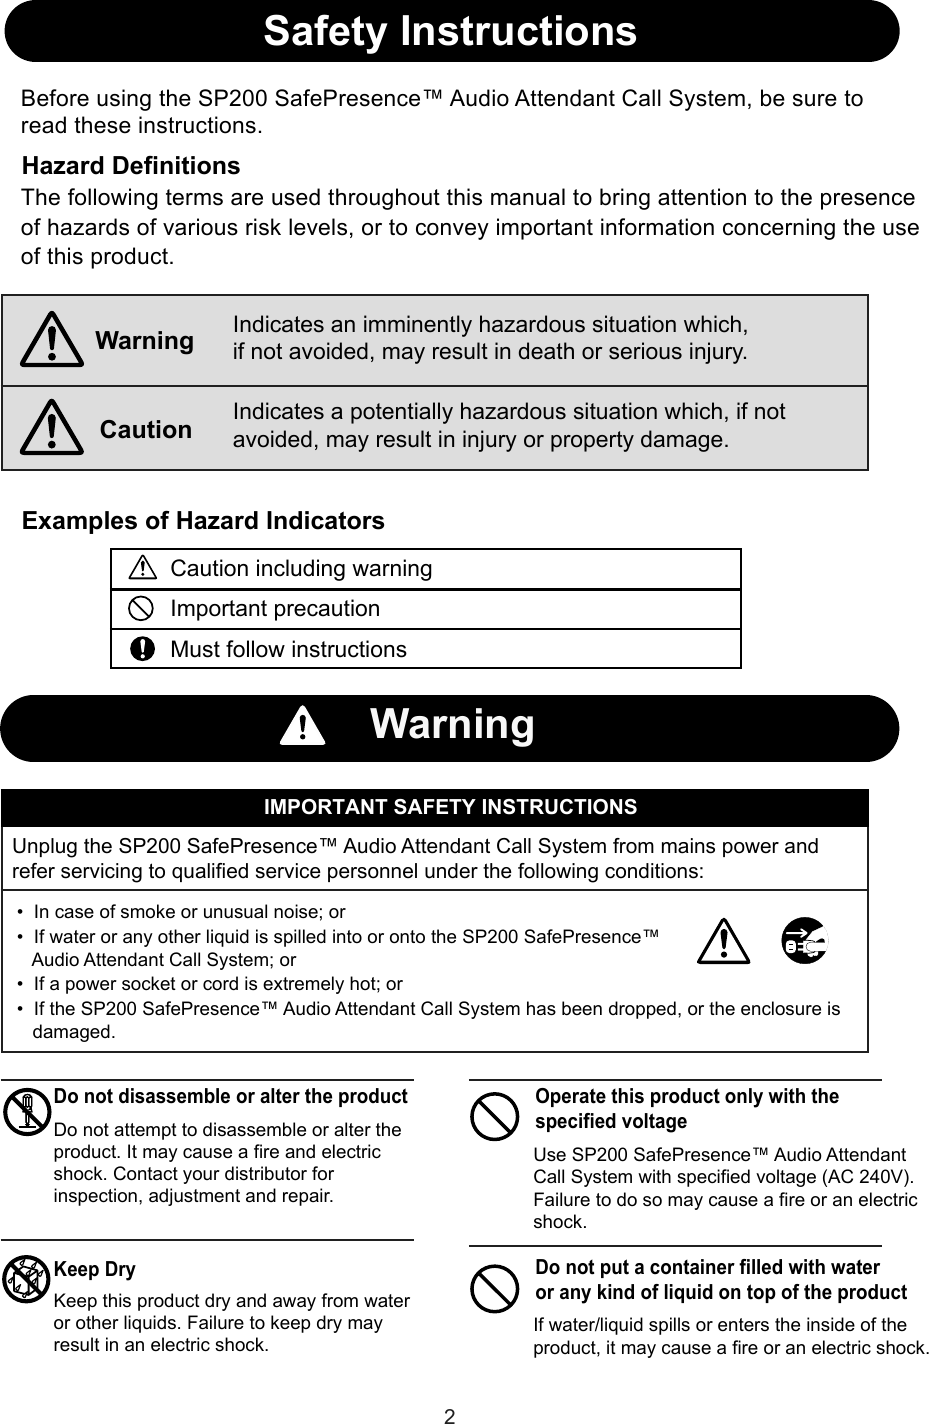 safety instructionshazard definitionsexamples of hazard